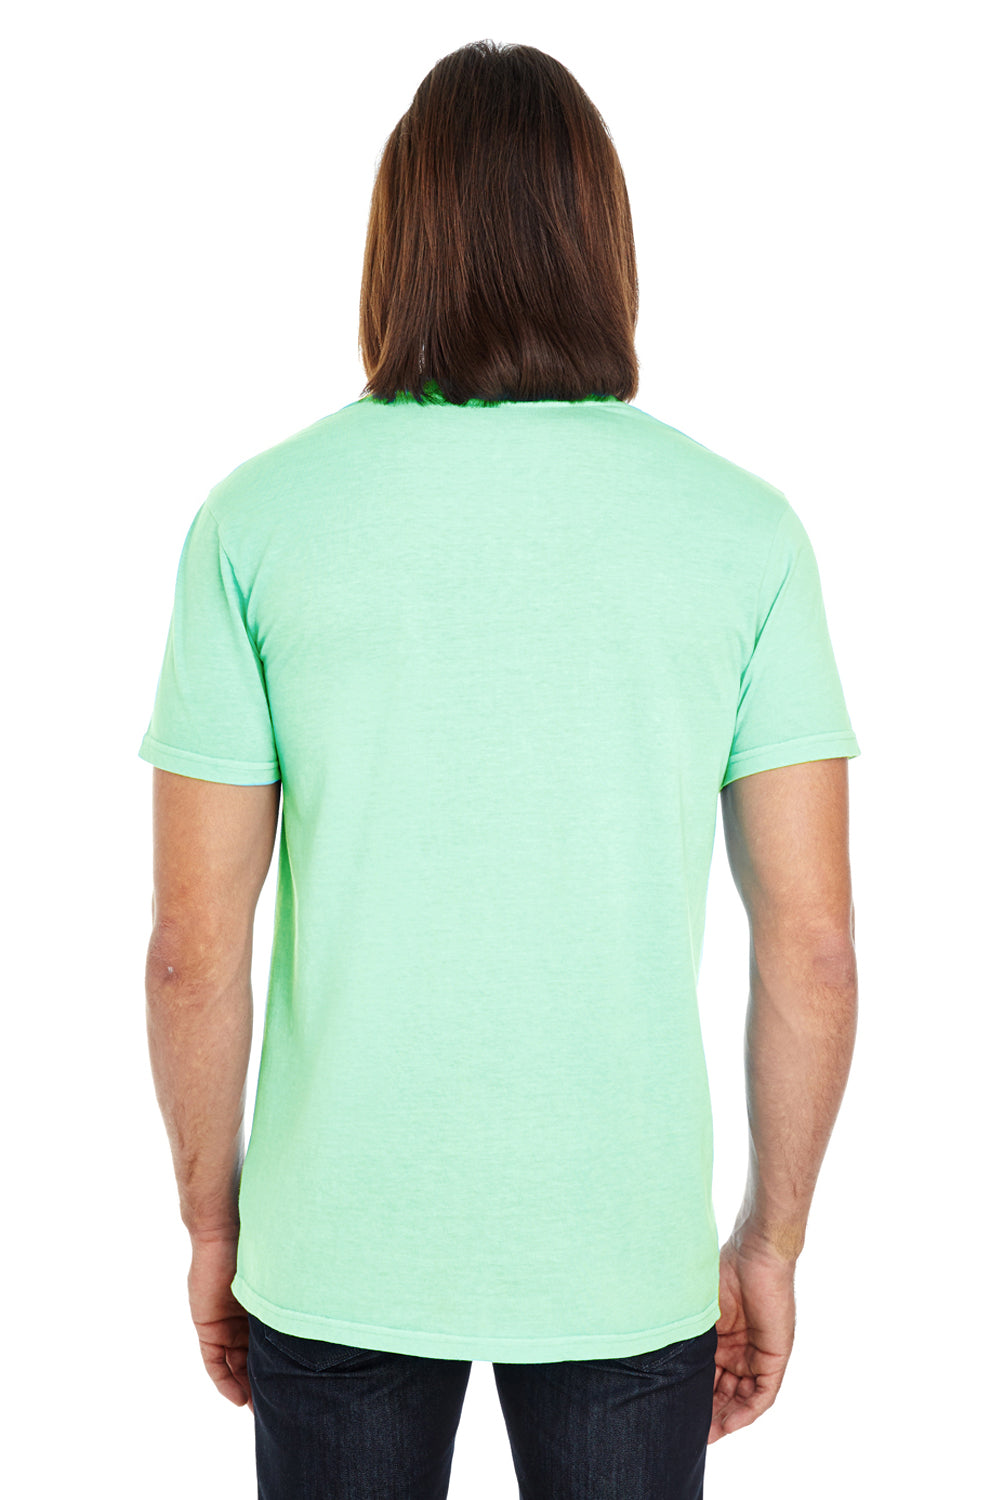 Threadfast Apparel 130A Mens Short Sleeve Crewneck T-Shirt Mint Green Back